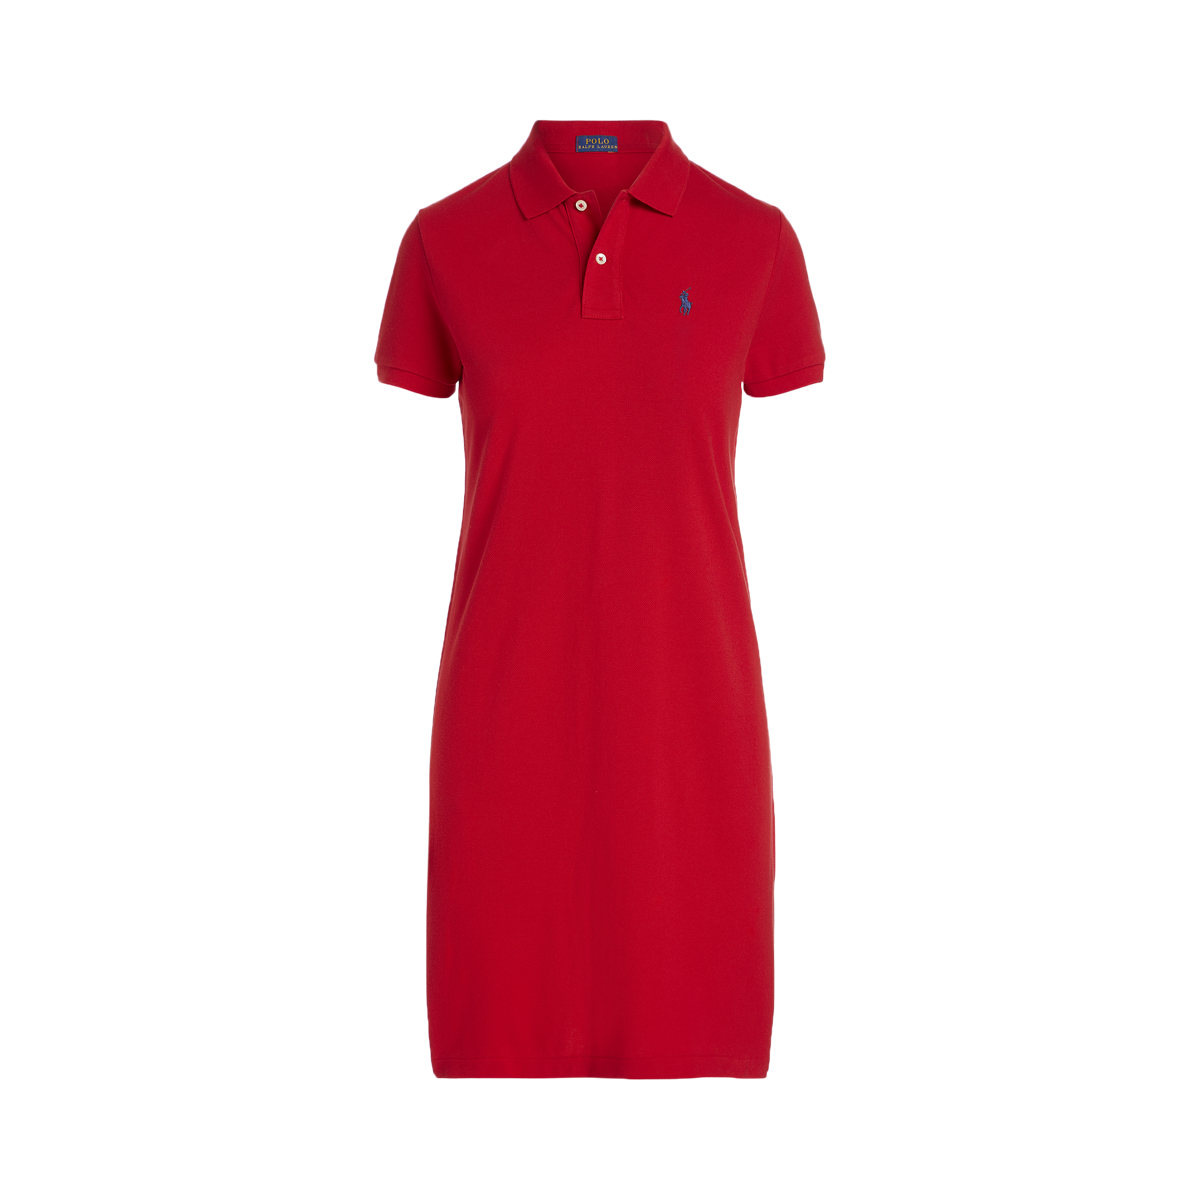 Ralph Lauren Women's Cotton Mesh Polo Dress - Size XS in Red